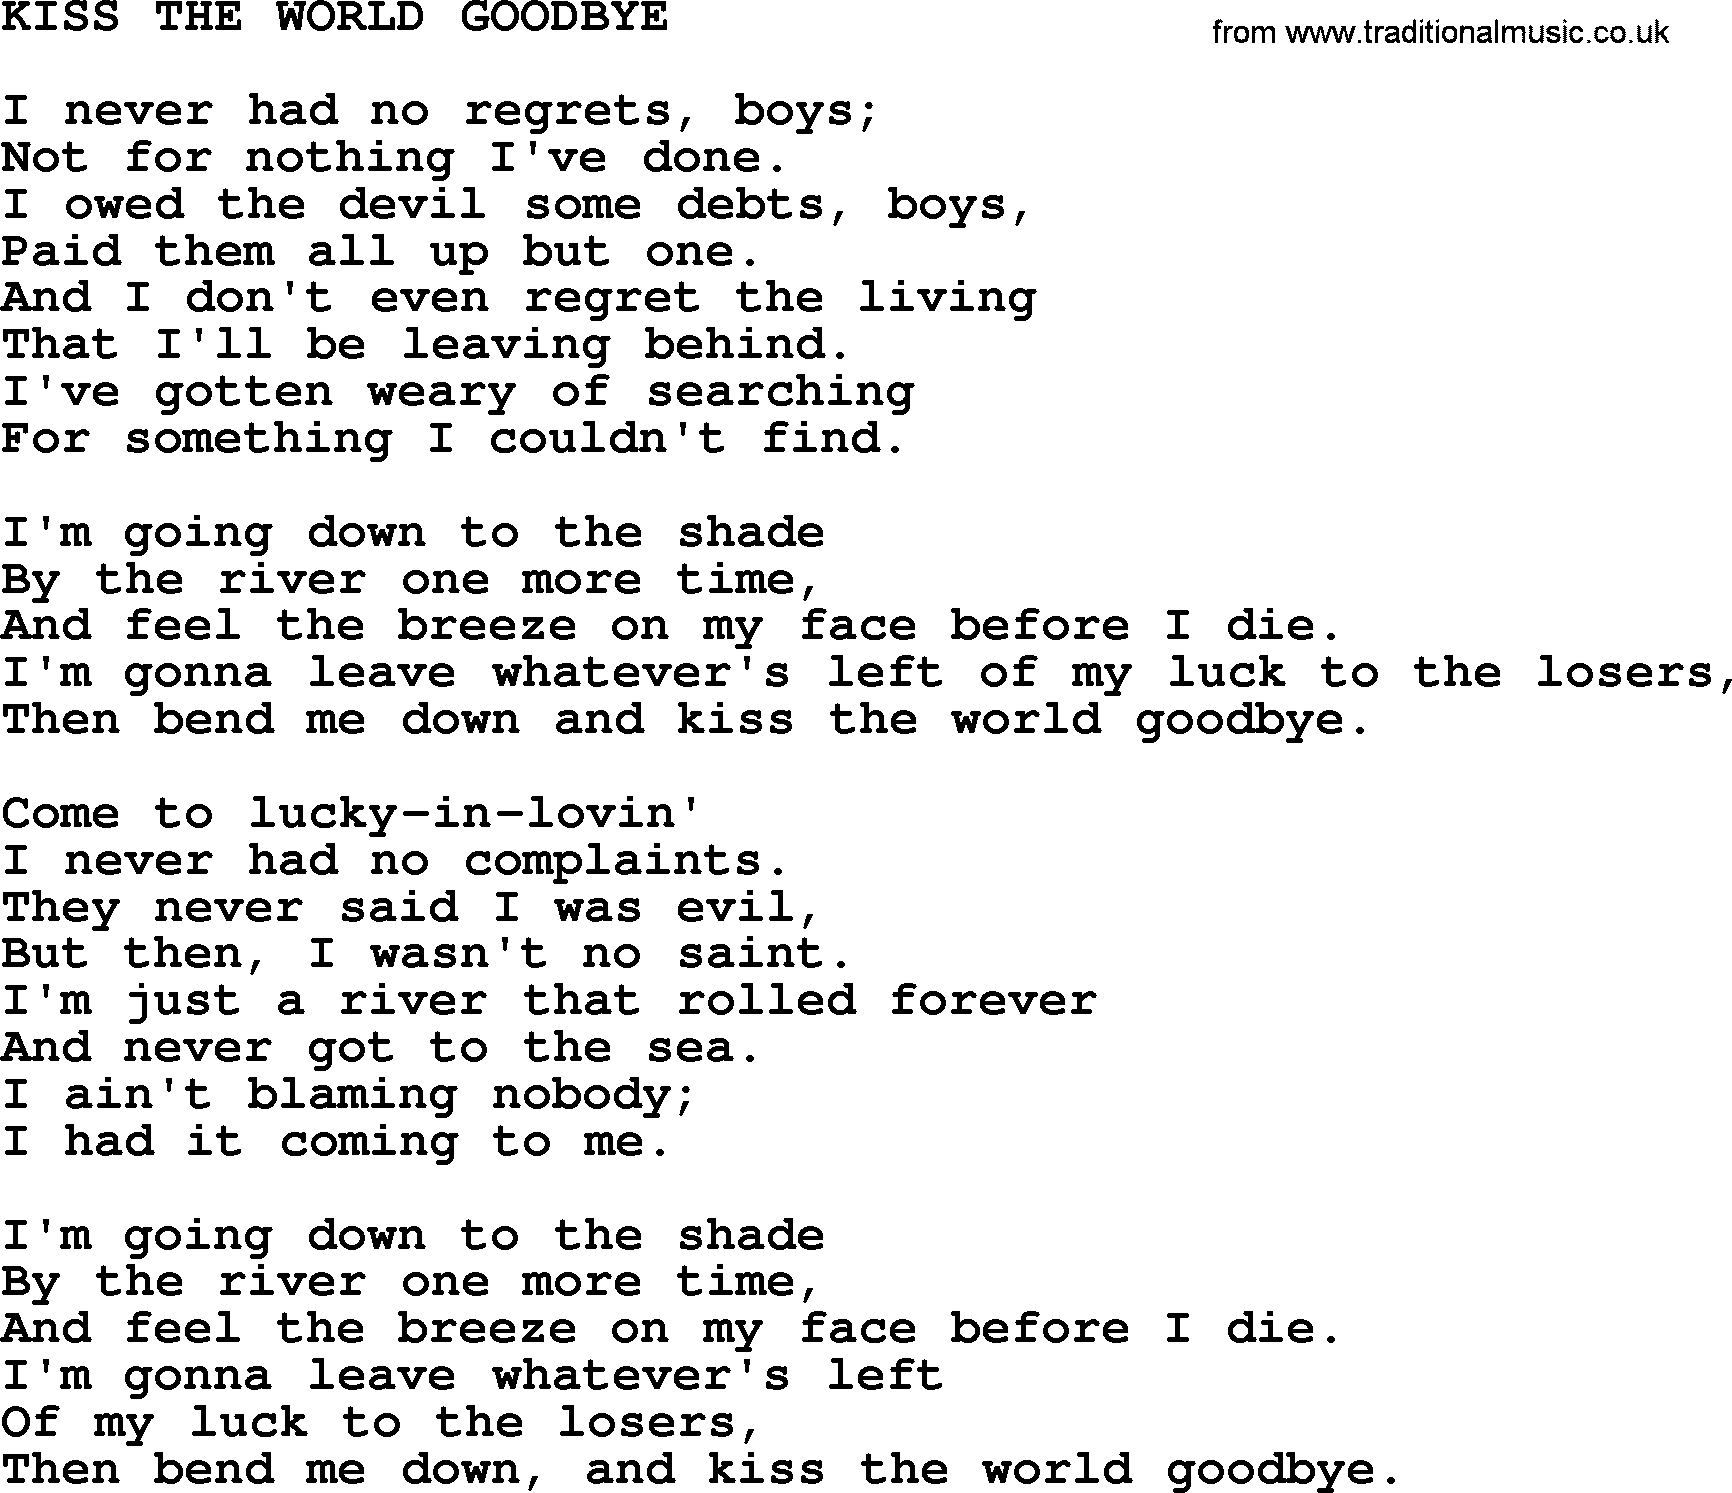 Kris Kristofferson song: Kiss The World Goodbye lyrics